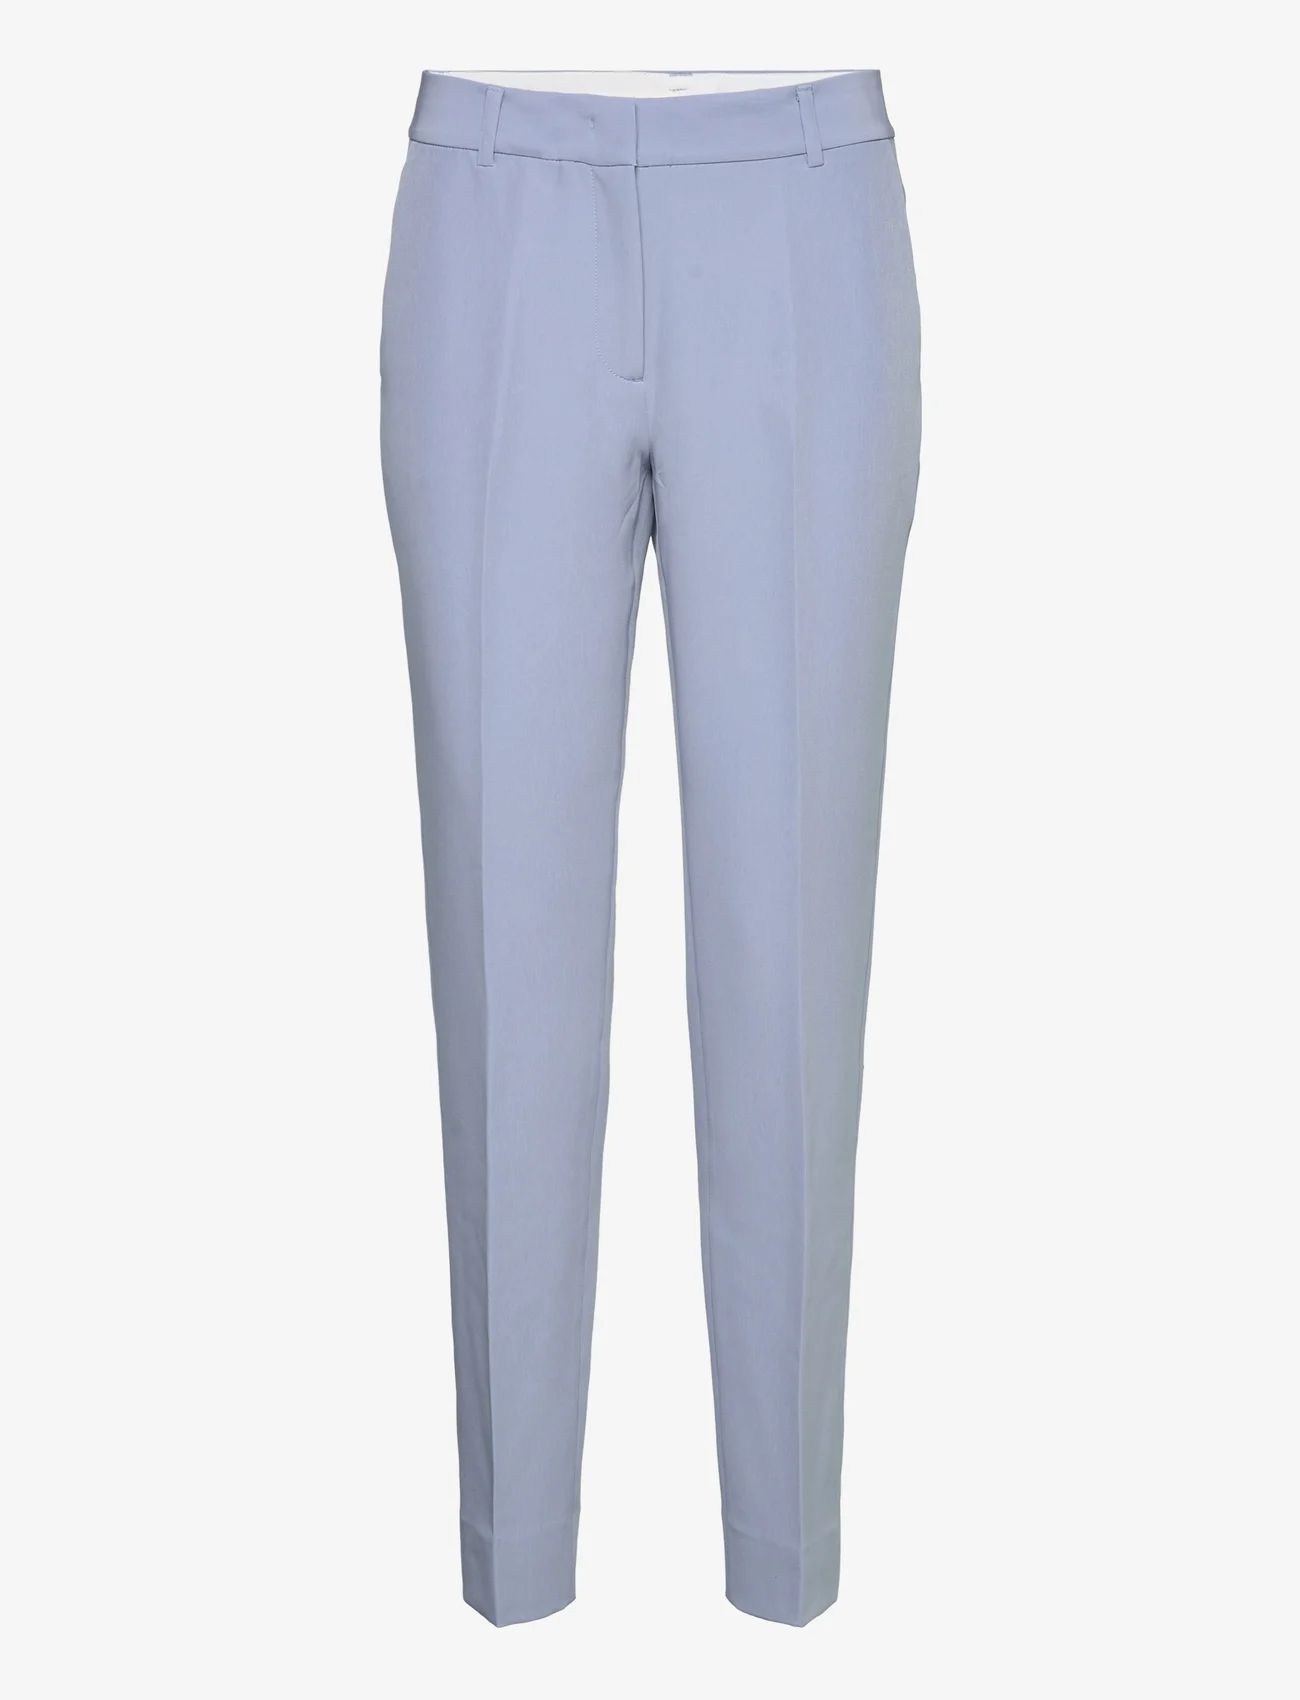 Bruuns Bazaar - RubysusBBLinea pants - puvunhousut - ash blue - 0